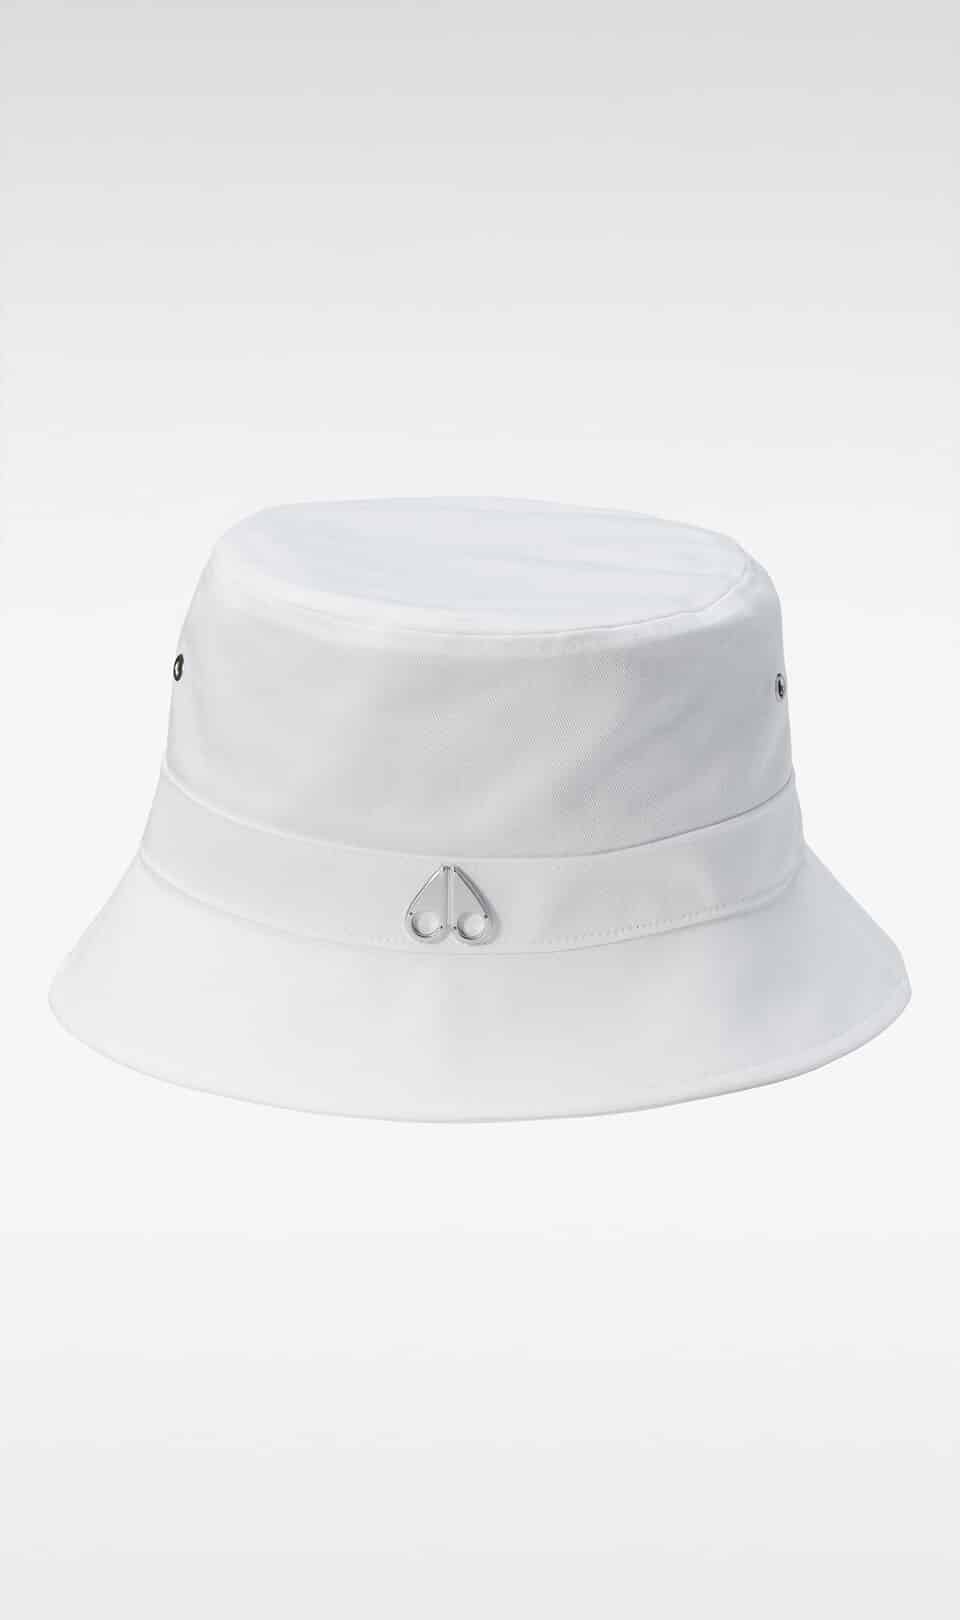 INSERT Moose Knuckles Spring Summer 2022 New Collection Sugar Beach Bucket Hat White